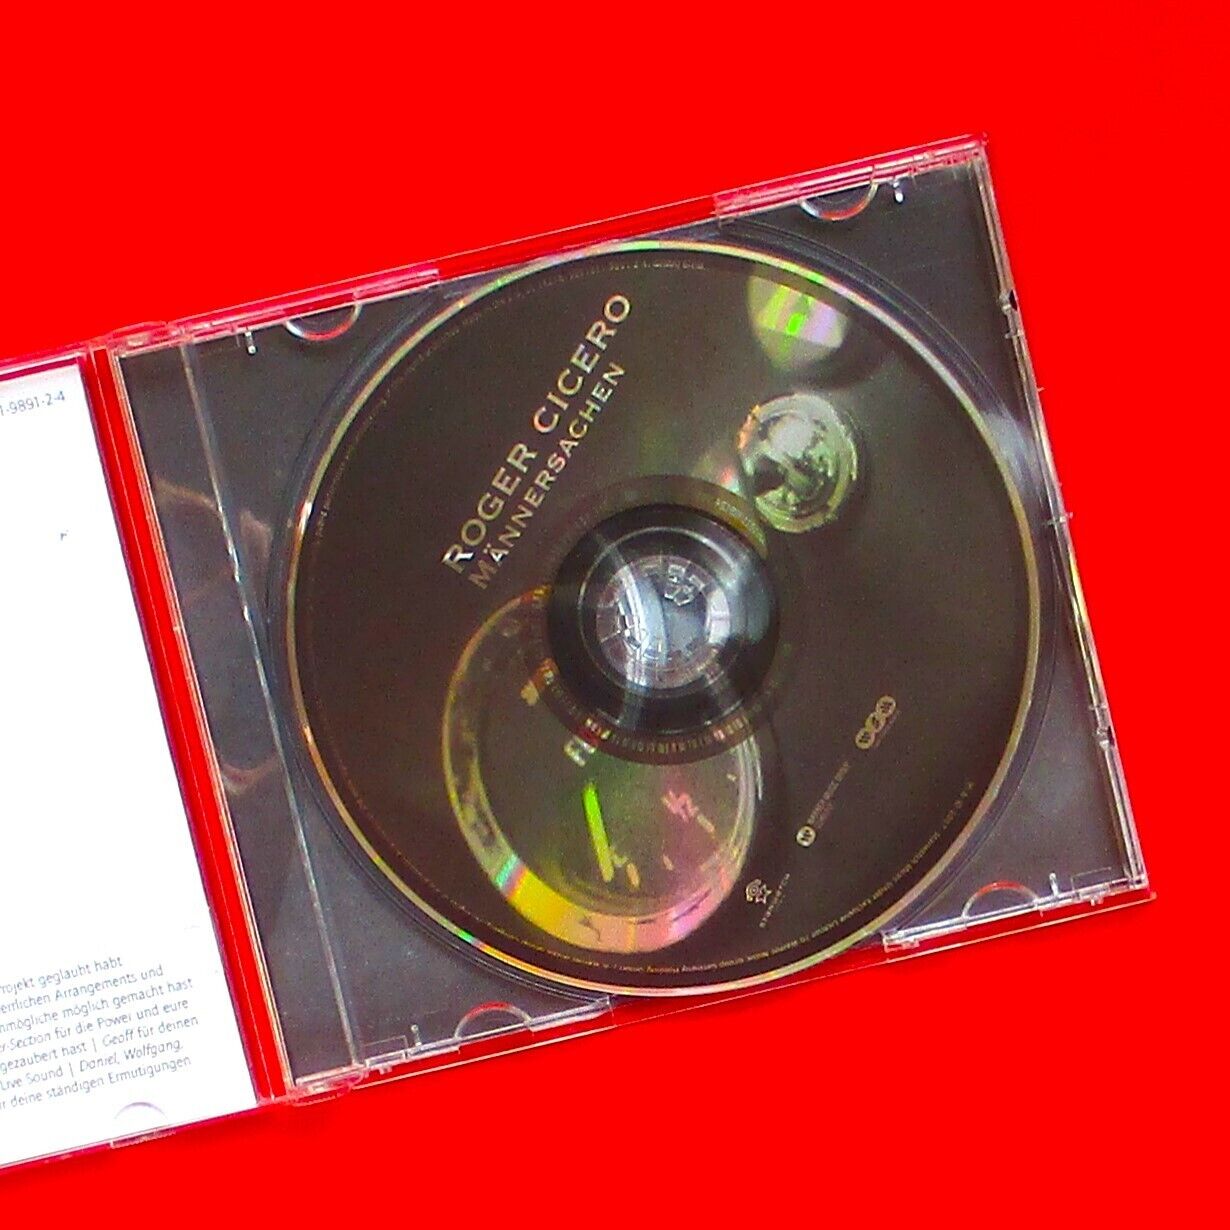 Roger Cicero Männersachen 2007 CD Album Jazz Pop Electronic German